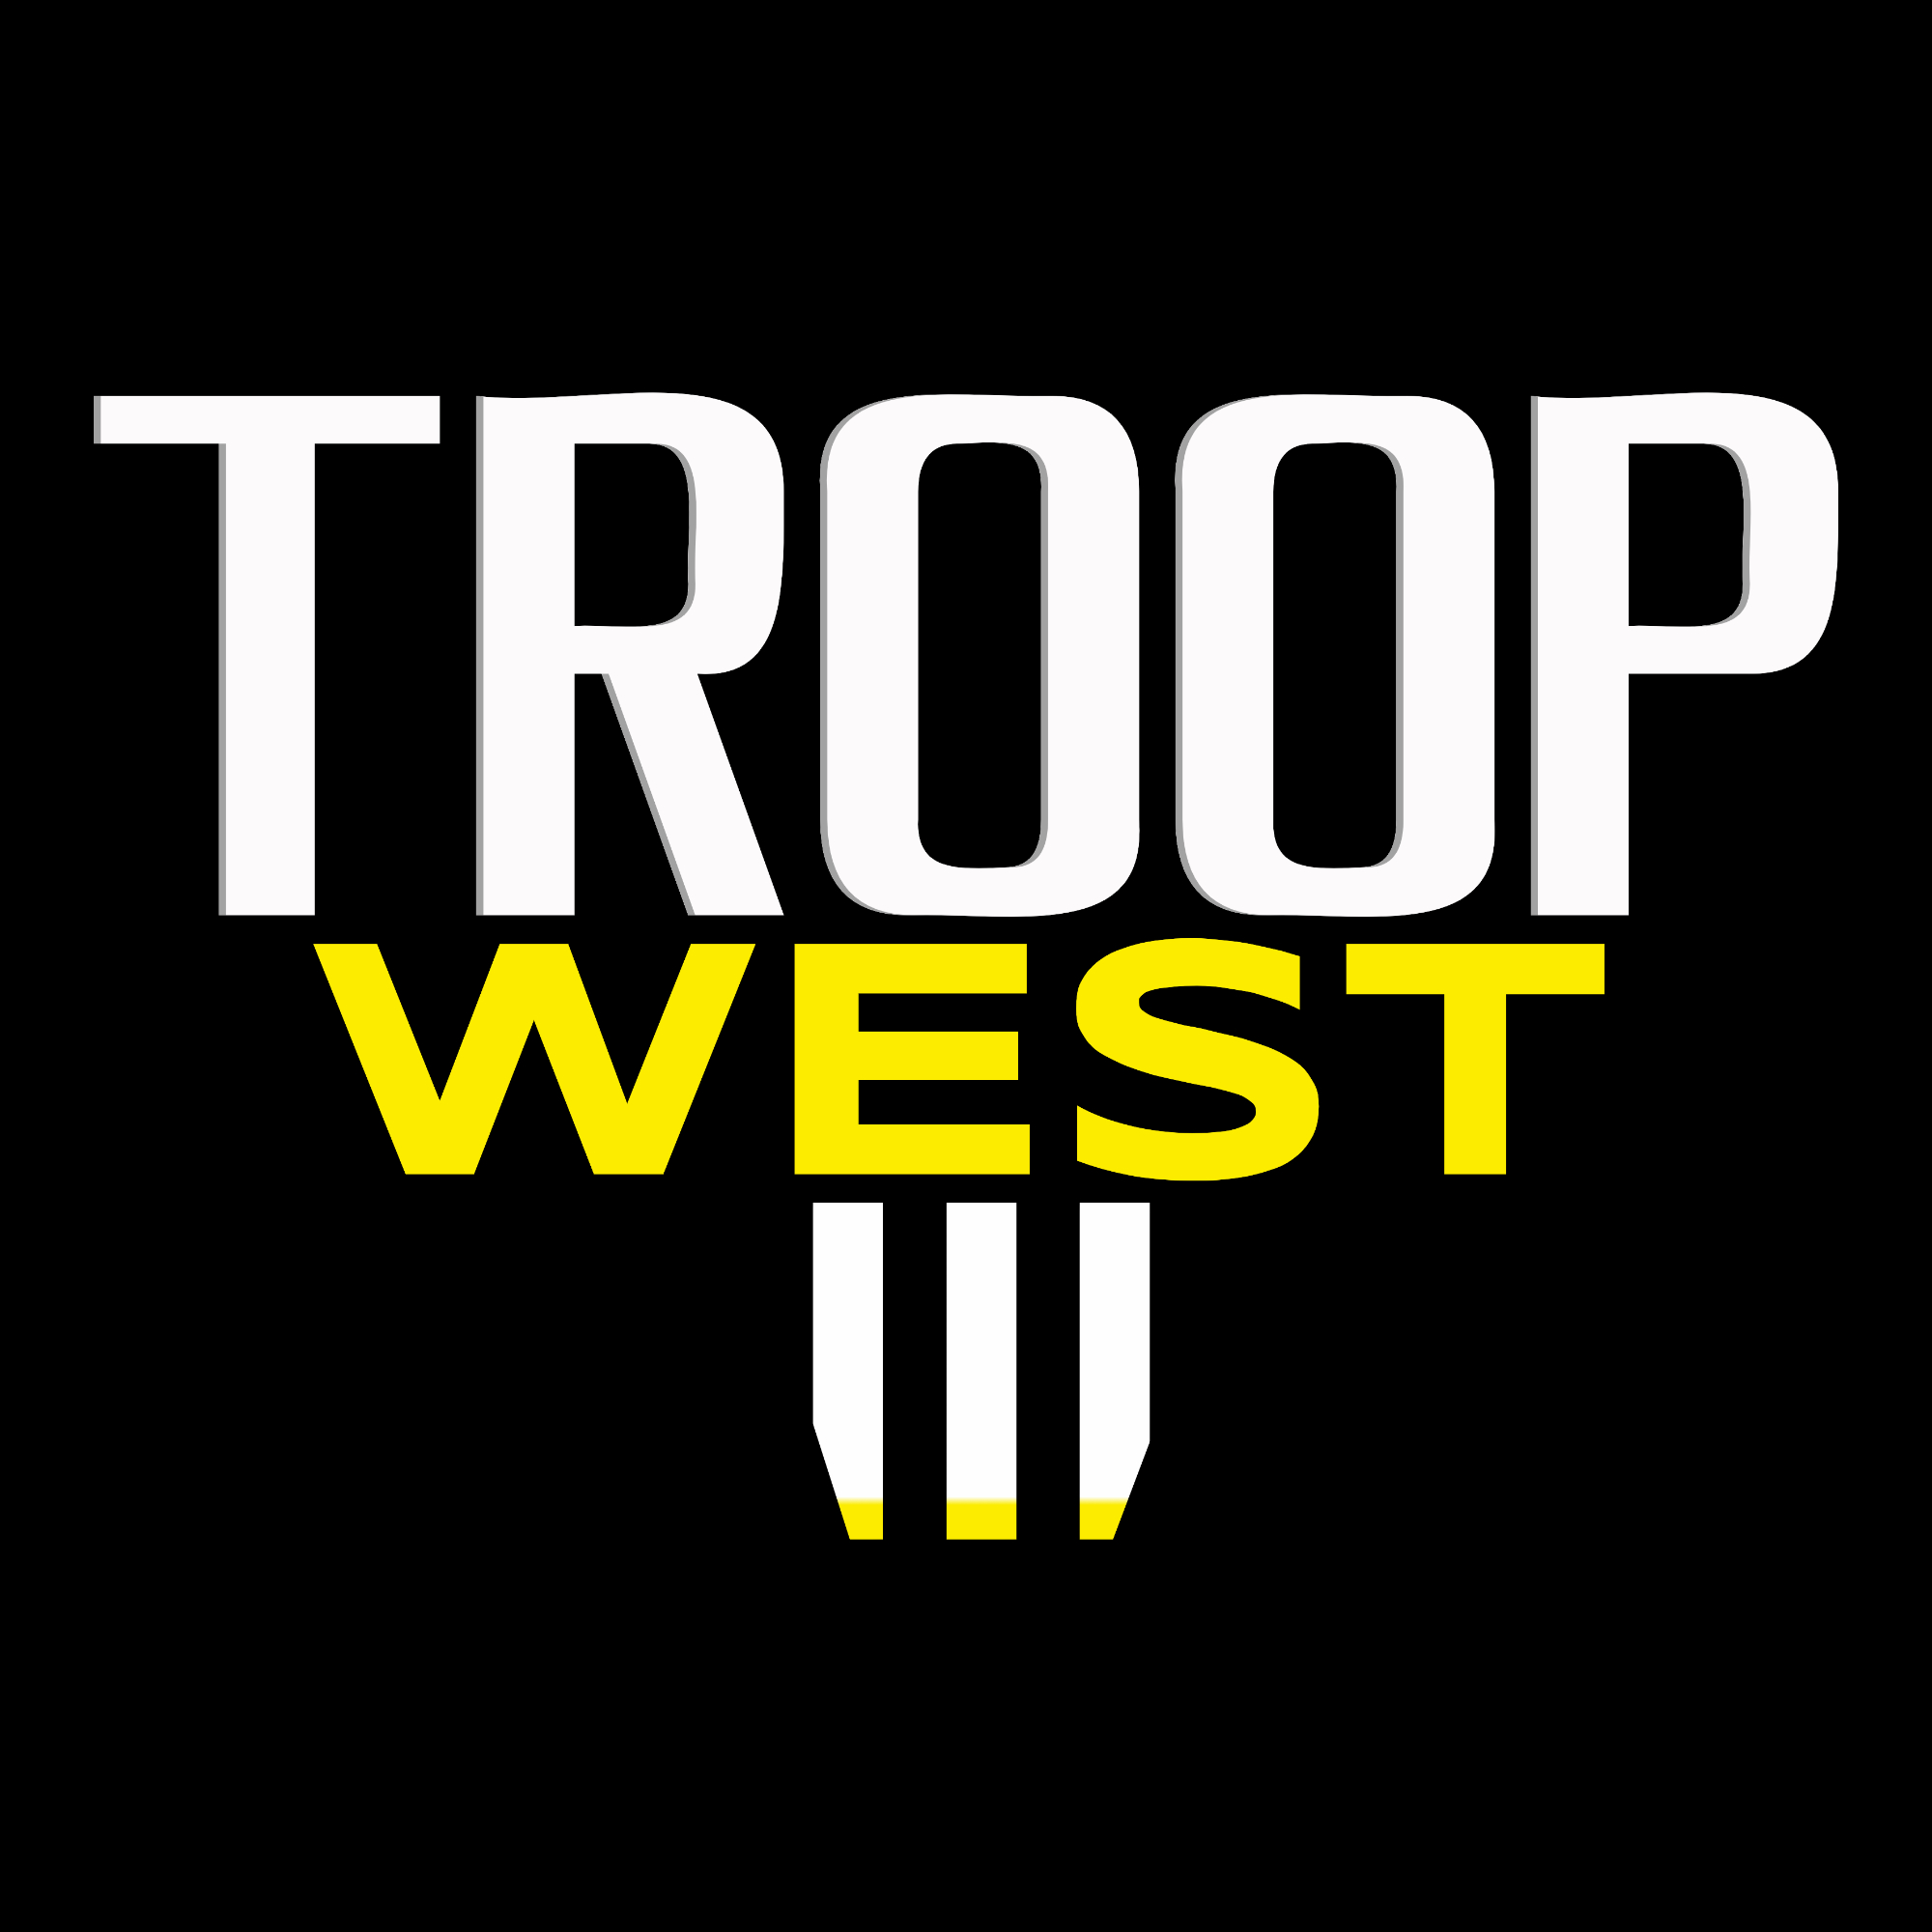 Organization logo for Troop West